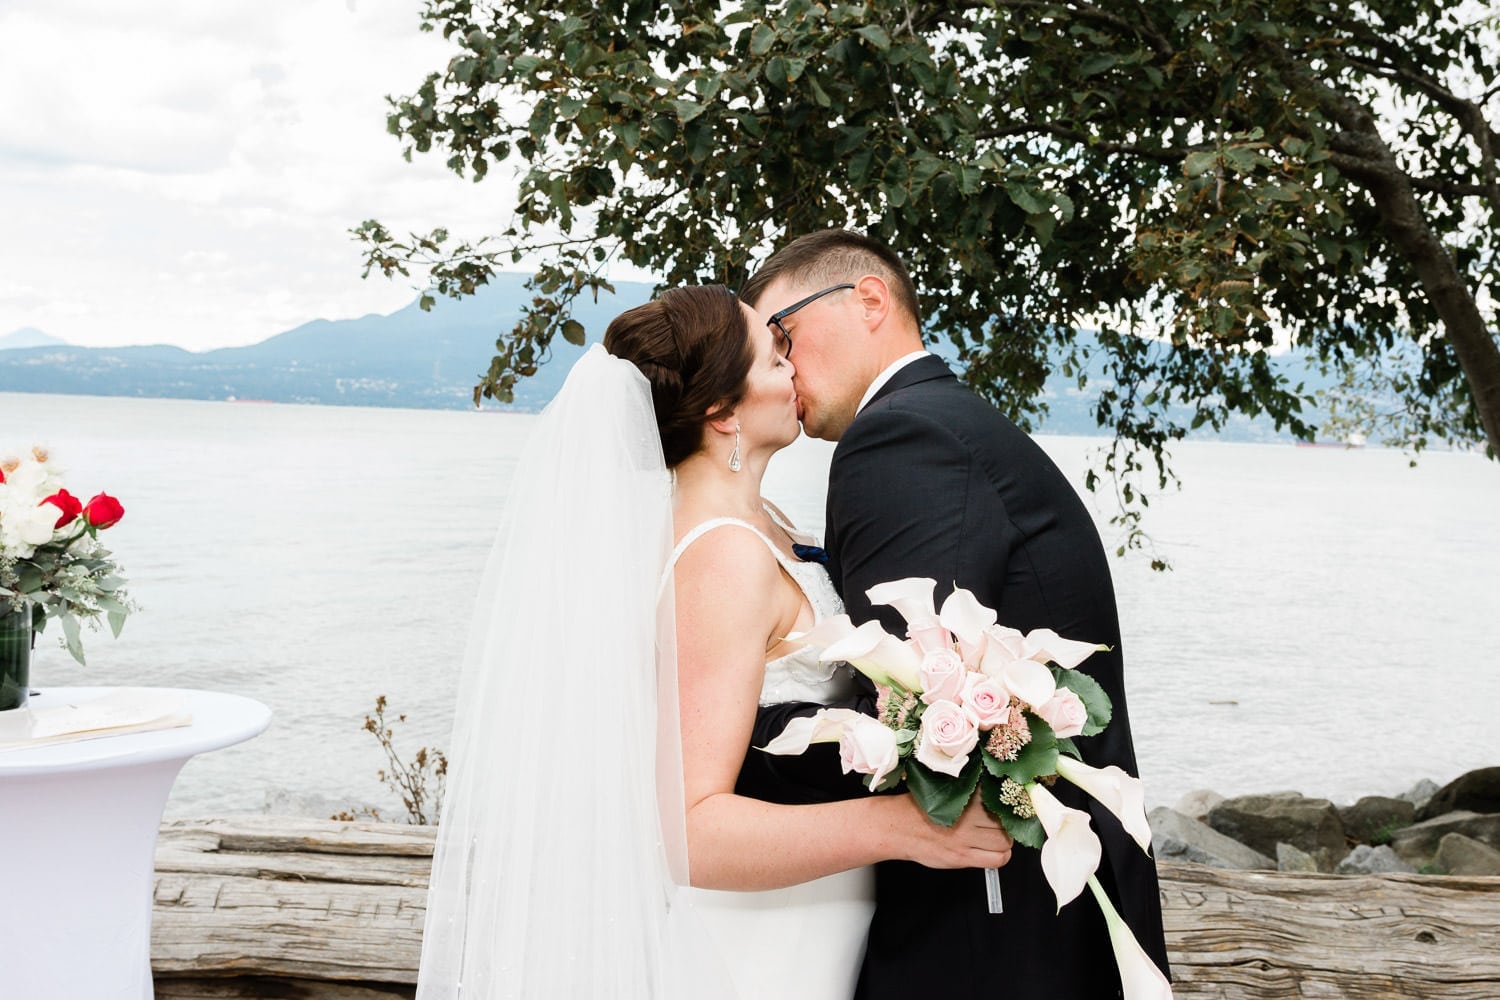 Wedding ceremony on Spanish banks | Vancouver wedding photographer wedding on Spanish banks